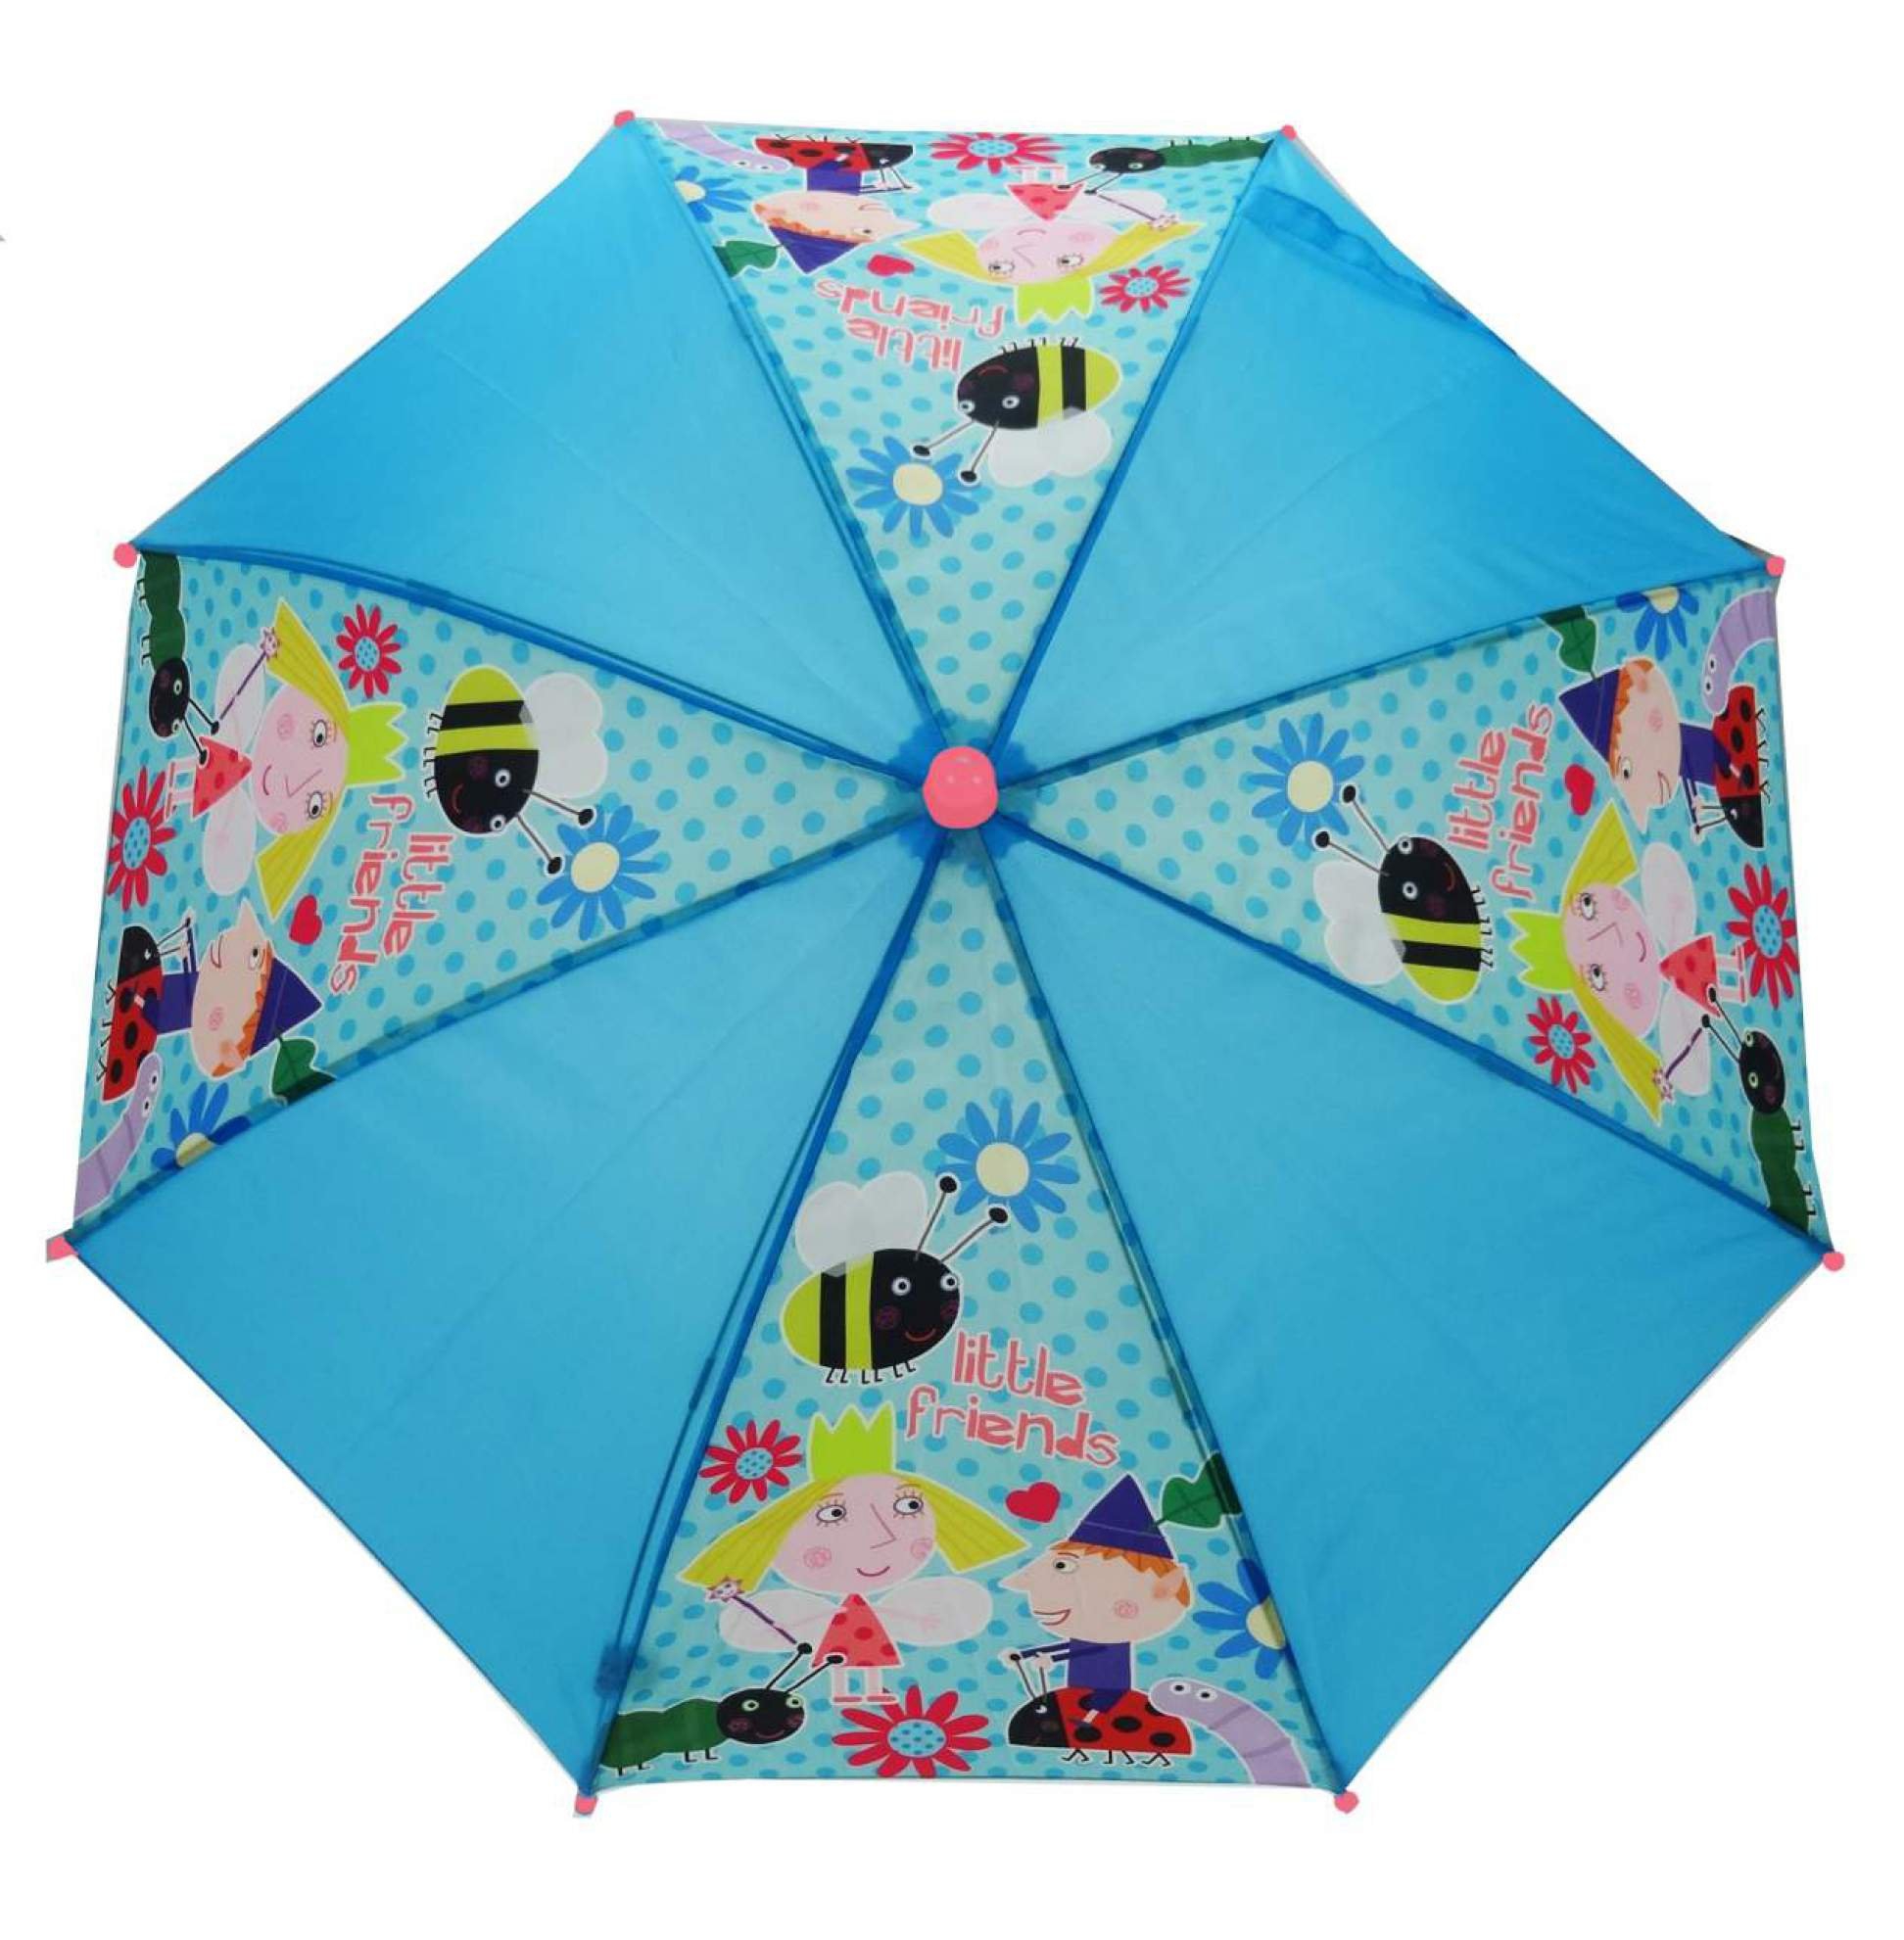 Ben & Holly' S Little Kingdom School Rain Brolly Umbrella